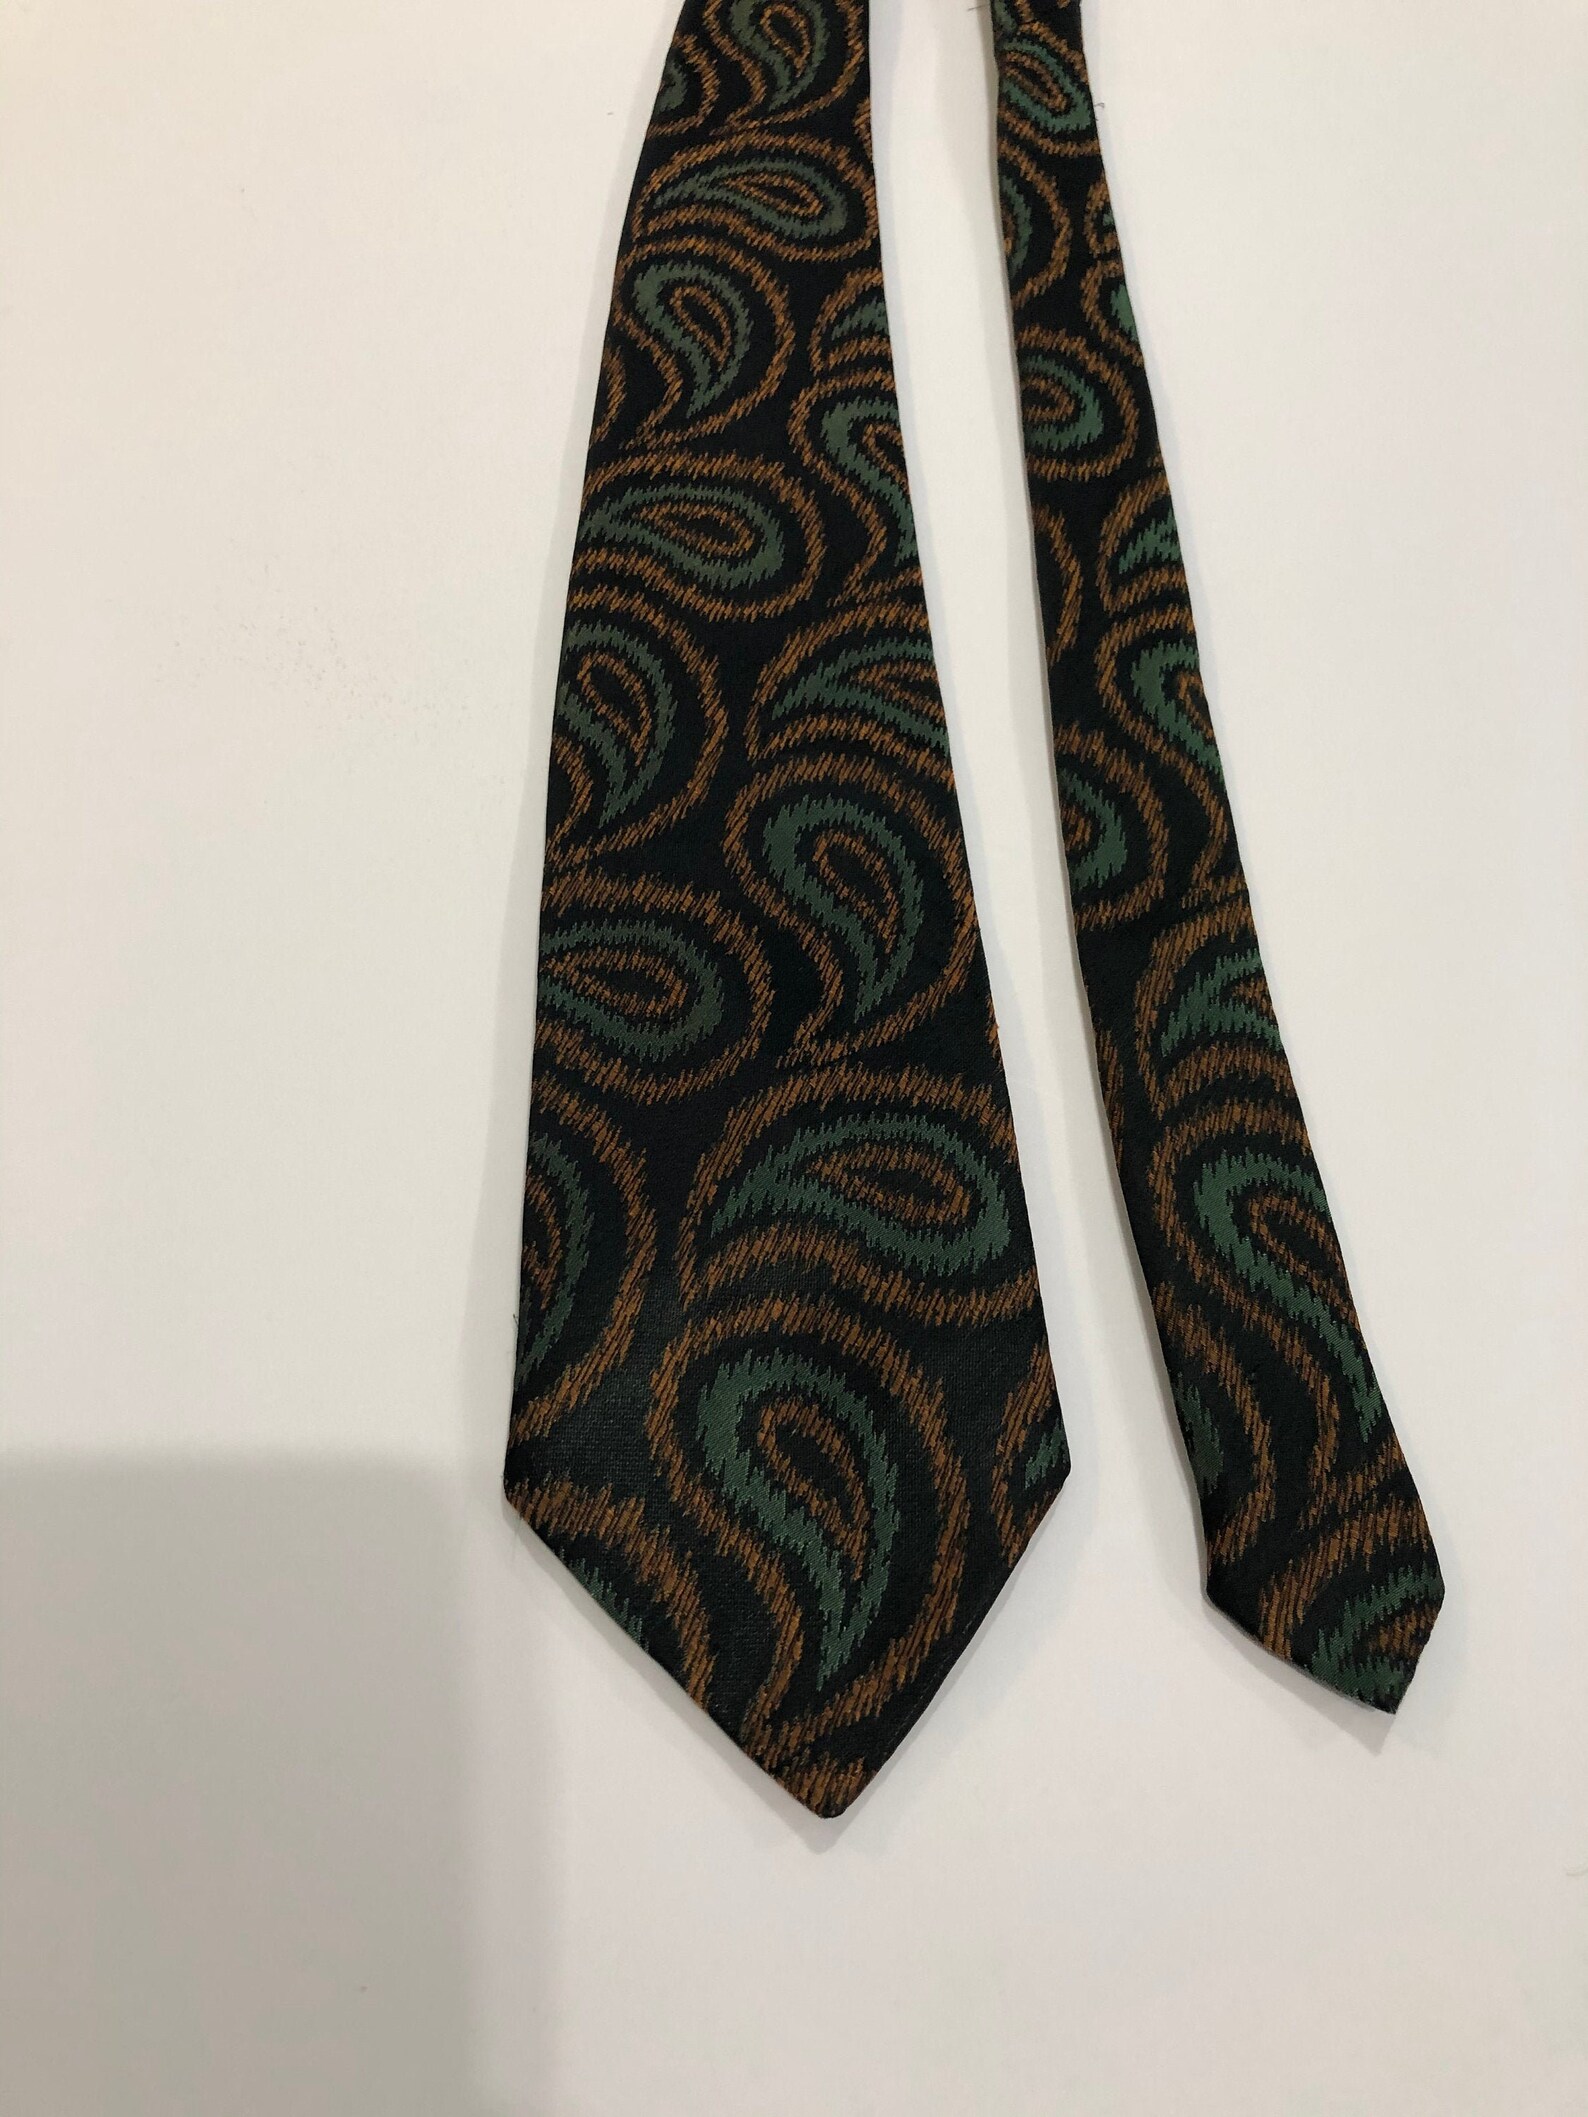 Antique Tie Wembley Neckite Cravat USA Made 1970s 27 | Etsy